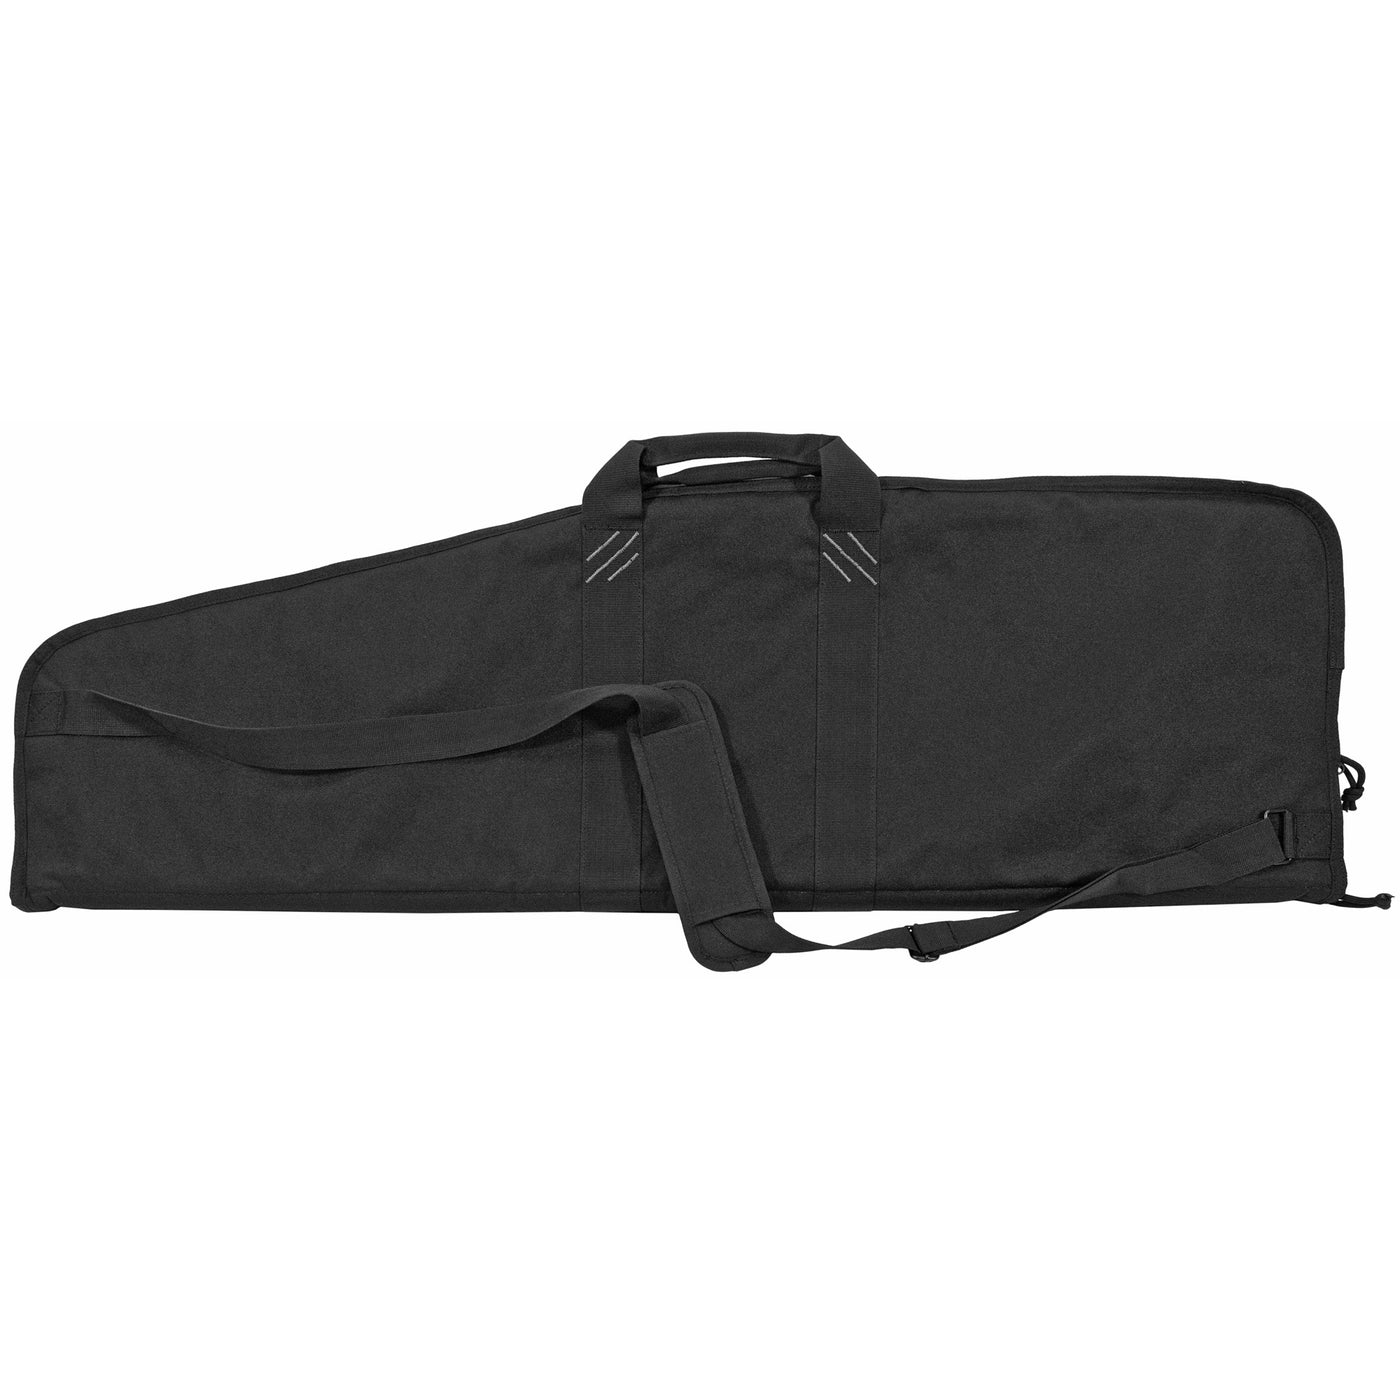 G*outdoors Single Rifle Case, Gps Src42     42" - Single Rifle Case (black)